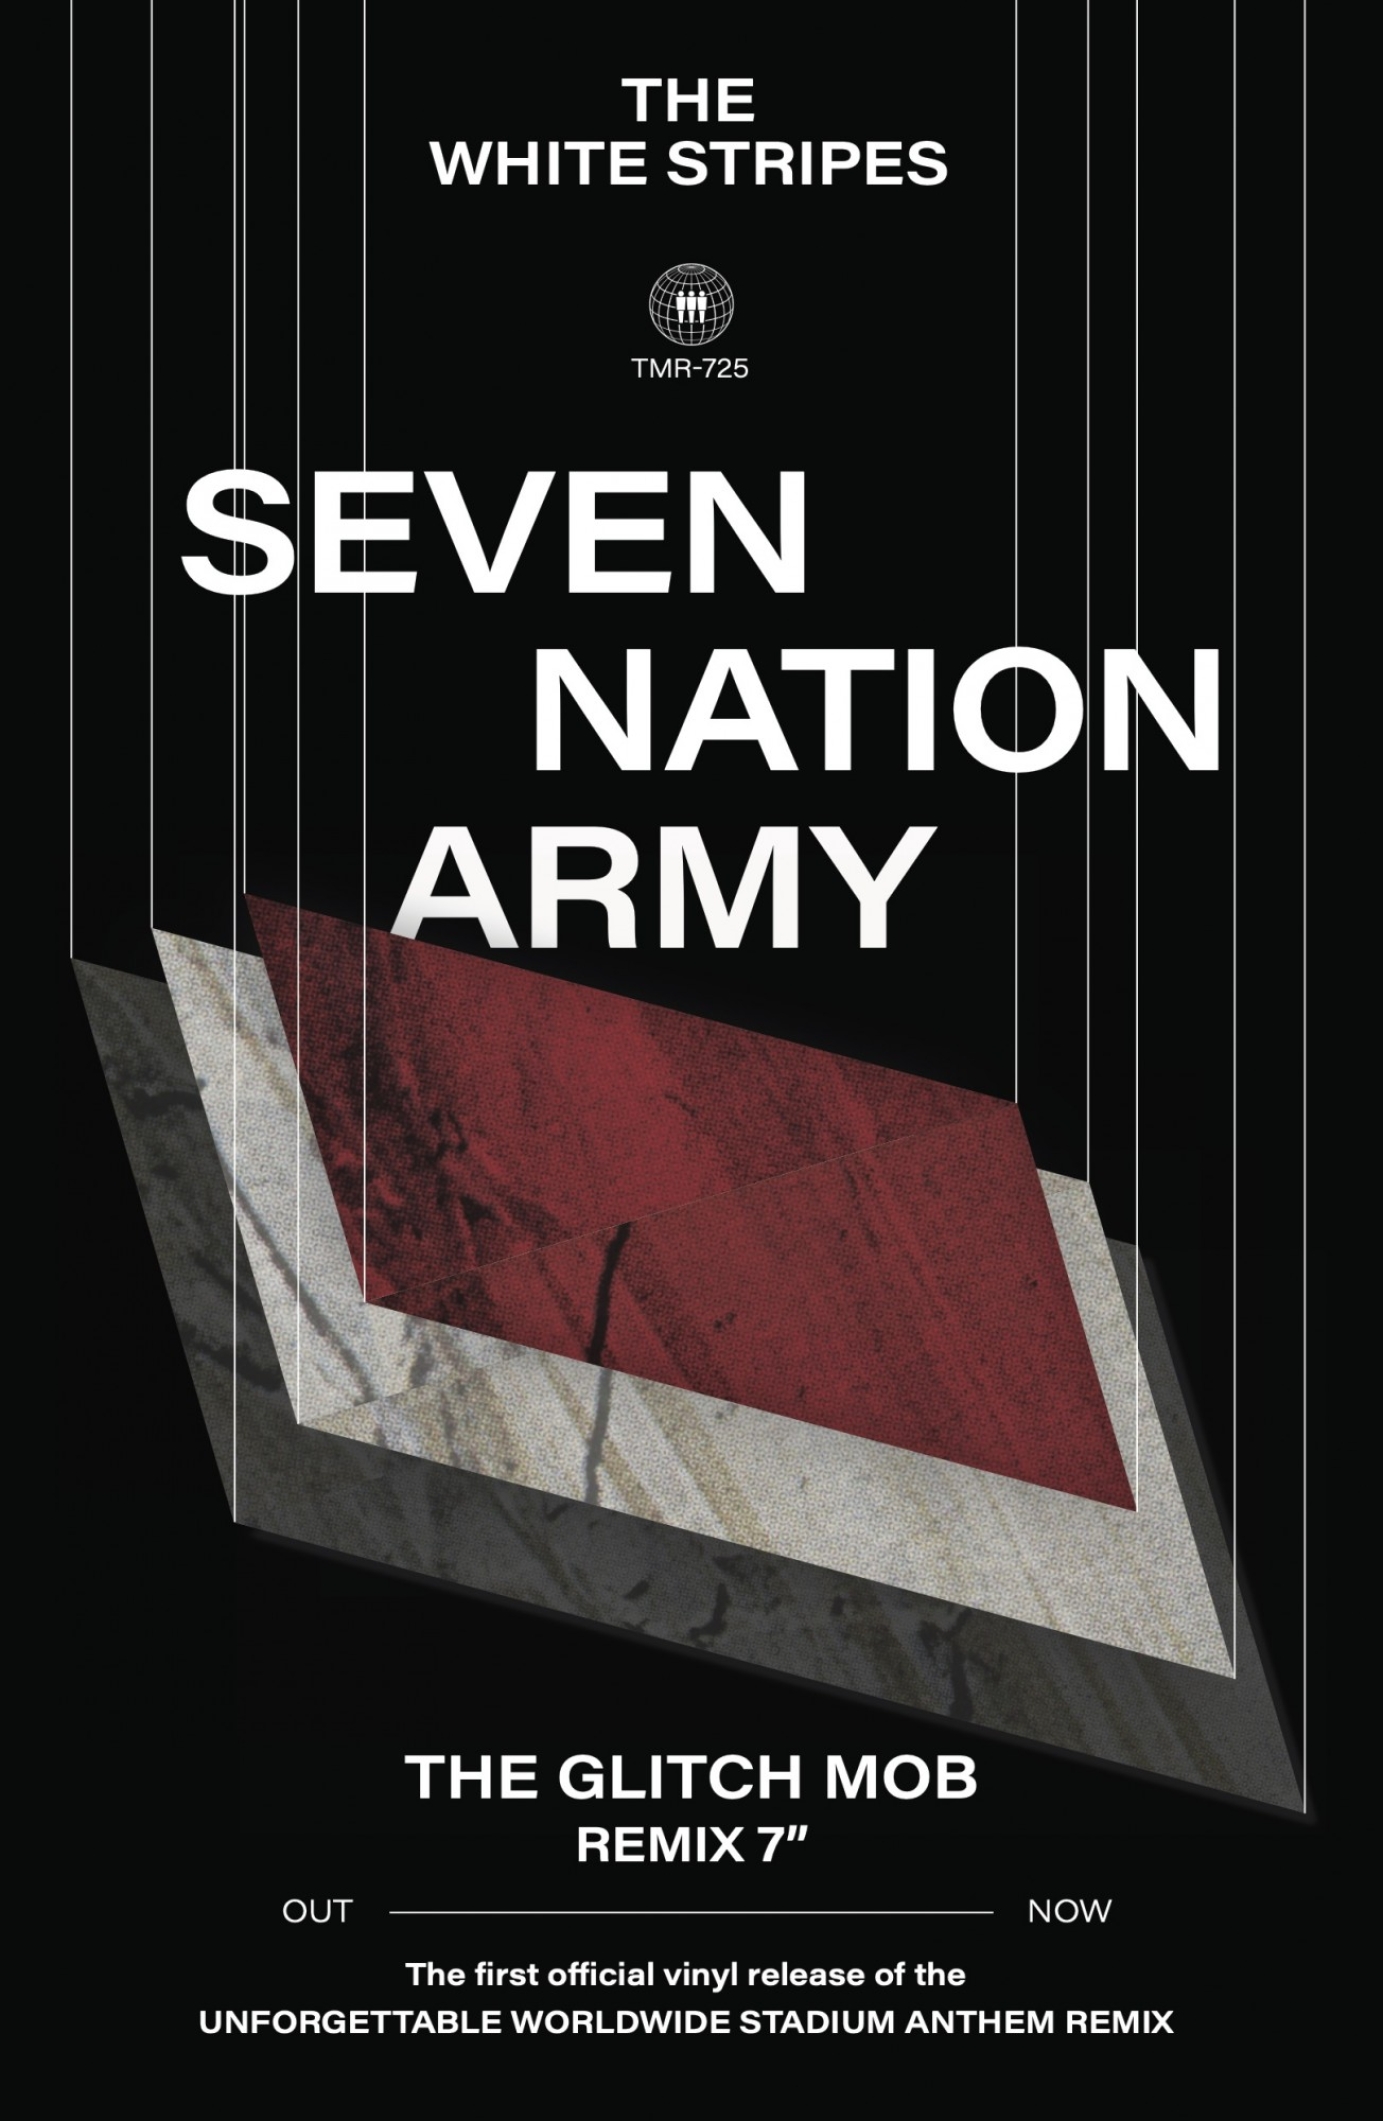 The White Stripes/Glitch Mob Seven Nation Army Remix 7"